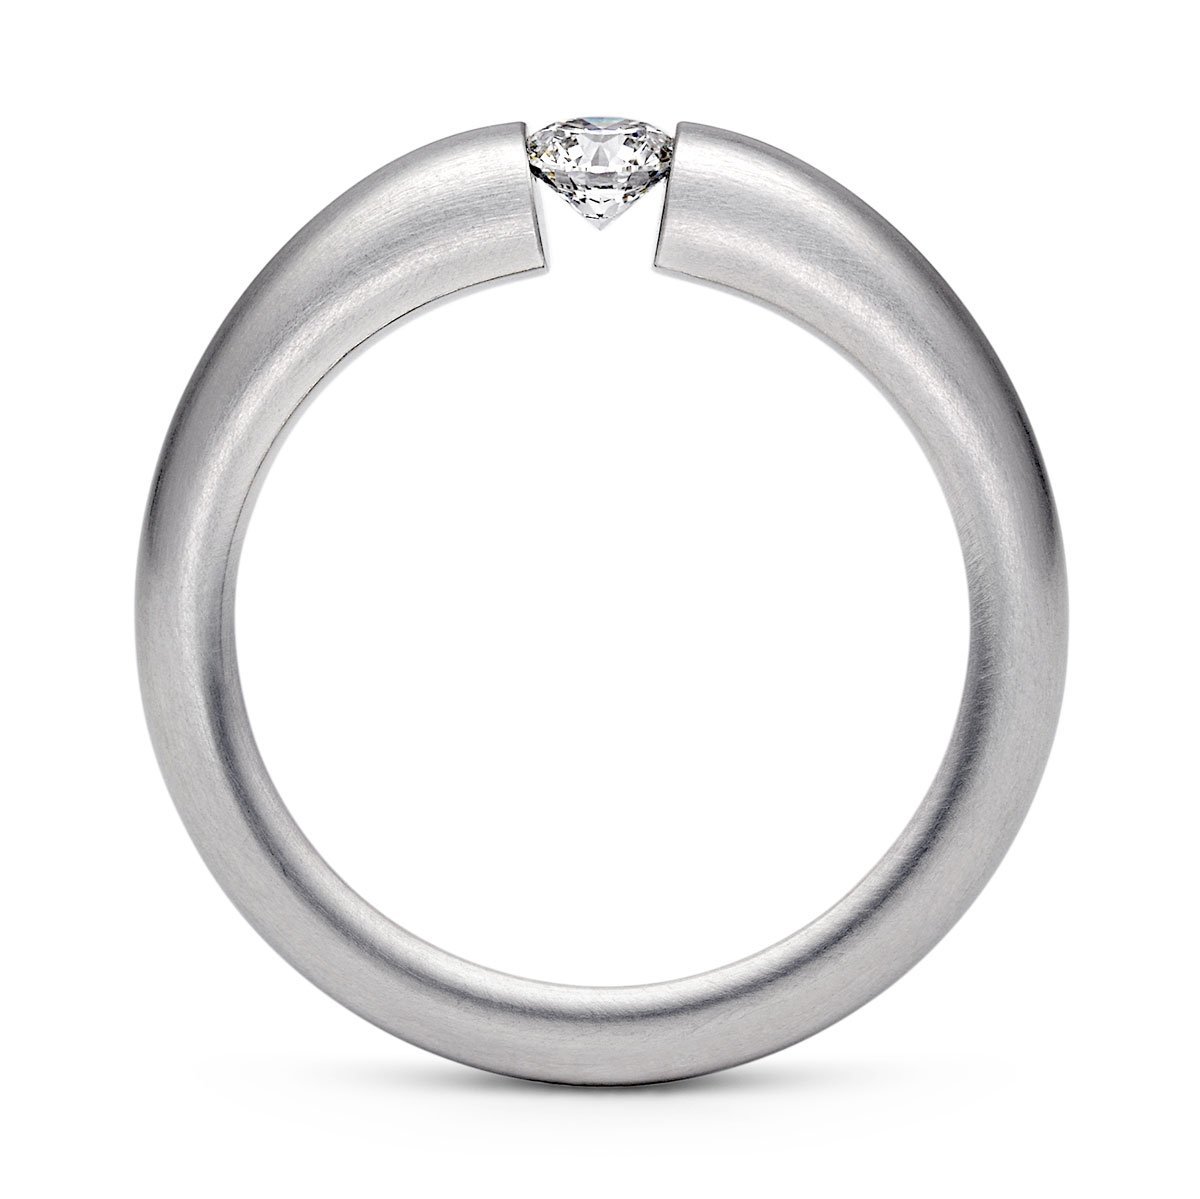 Tapered by Niessing - Davidson JewelsNiessing Engagement Ring5Red Gold18 Karat